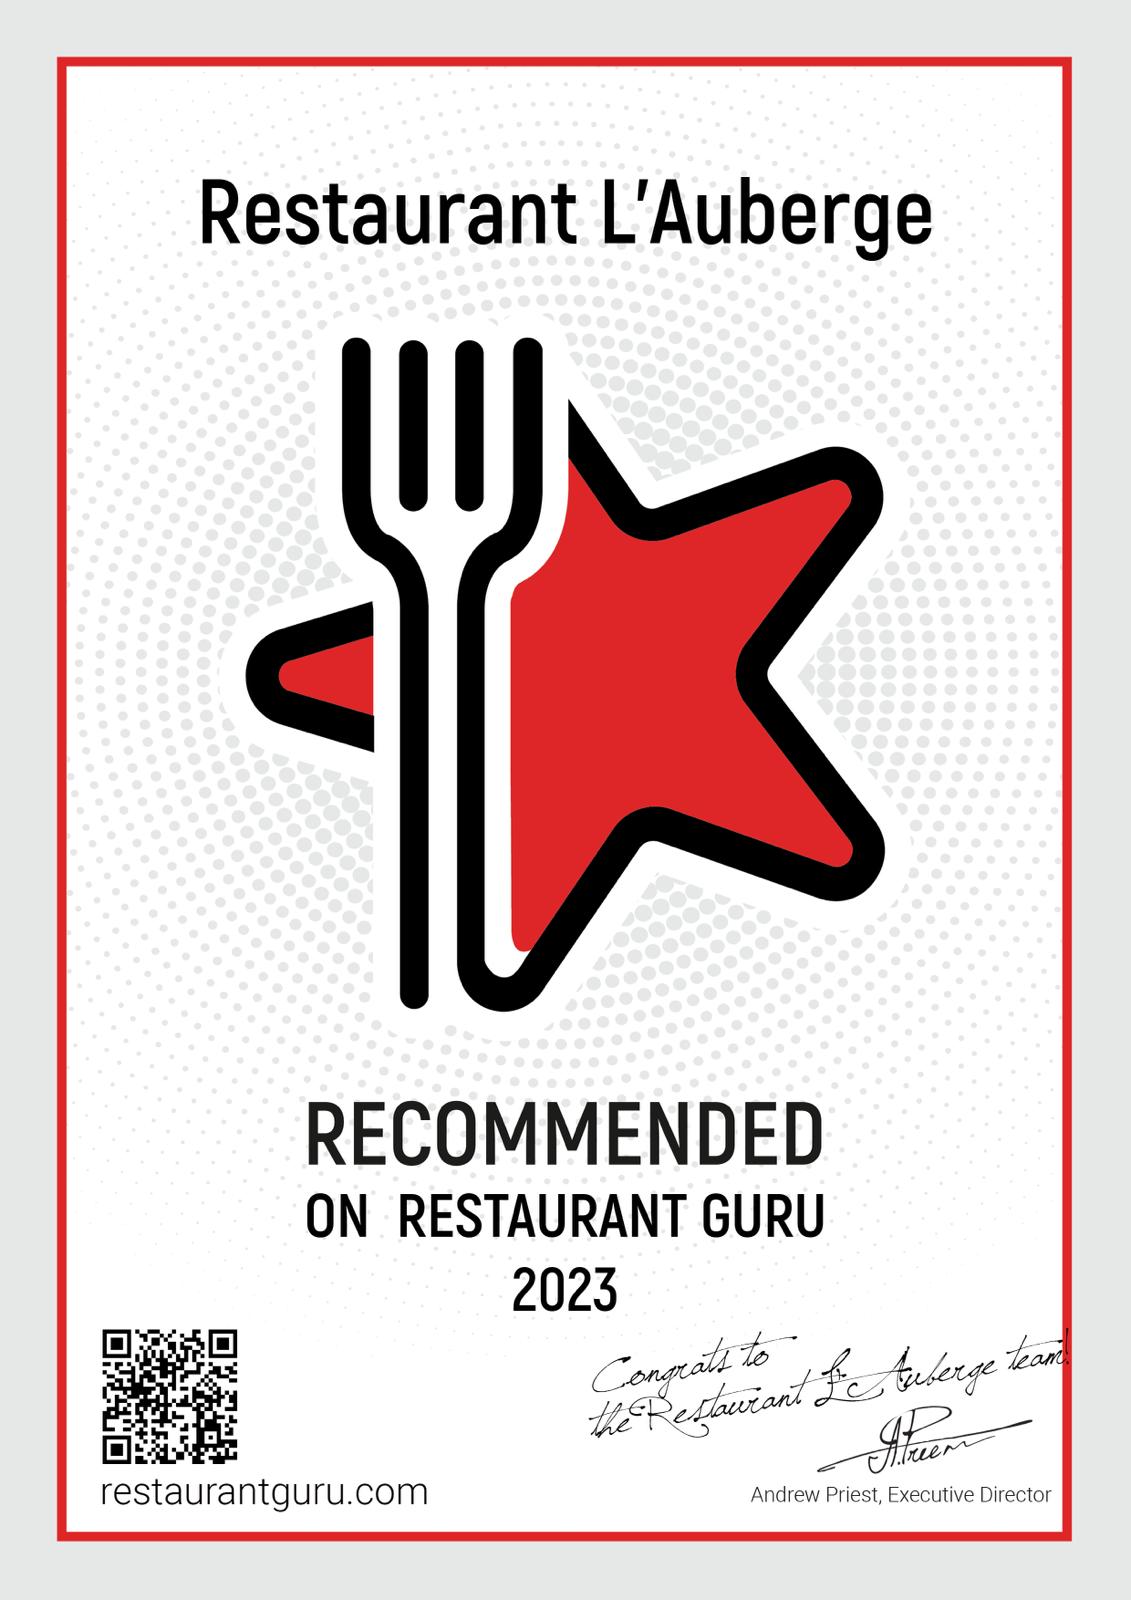 Restaurant L'Auberge - Recommended on Restaurant Guru